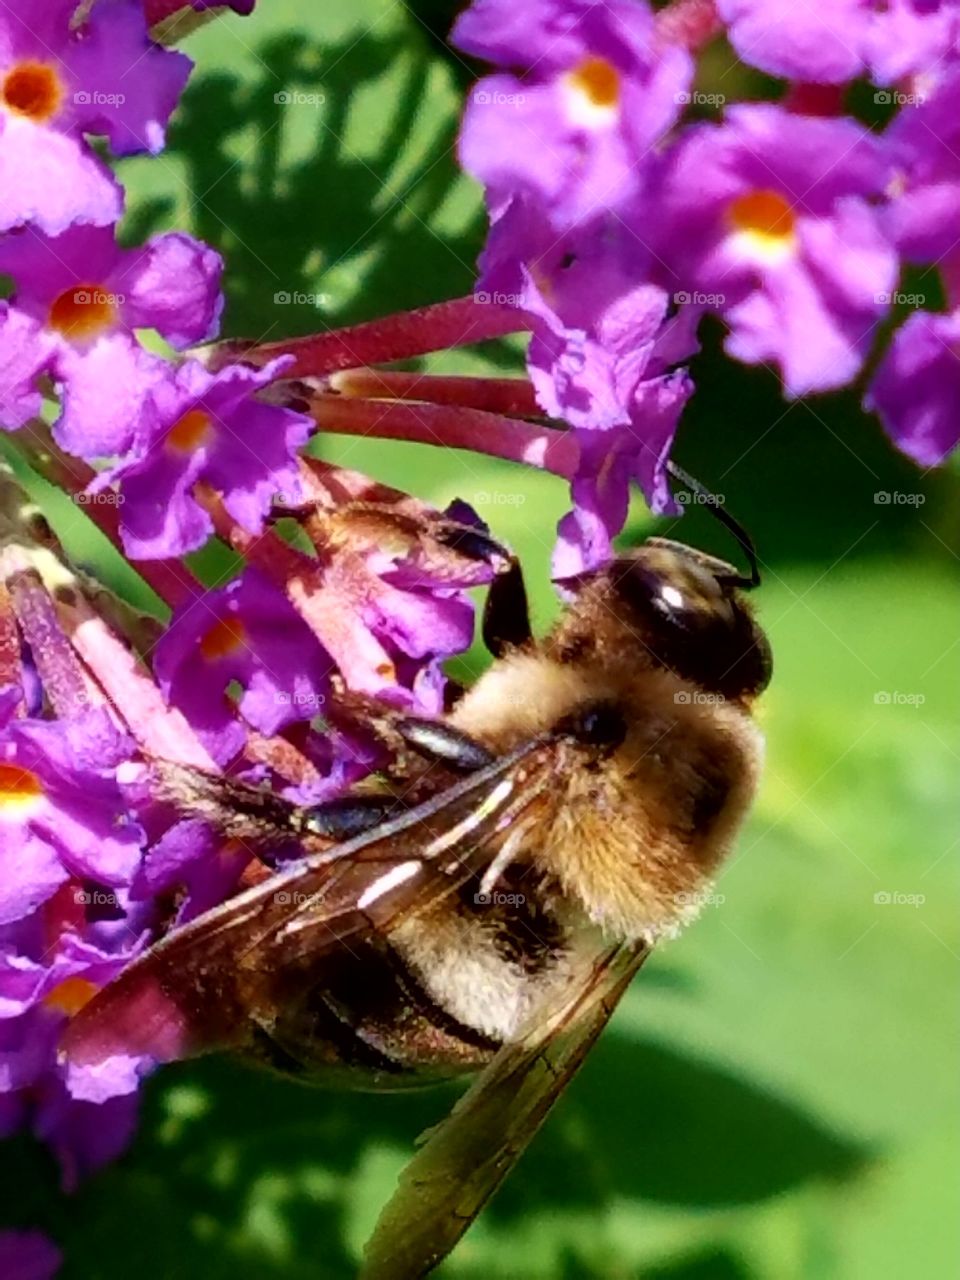 Bumblebee gathering pollen from purple bush.